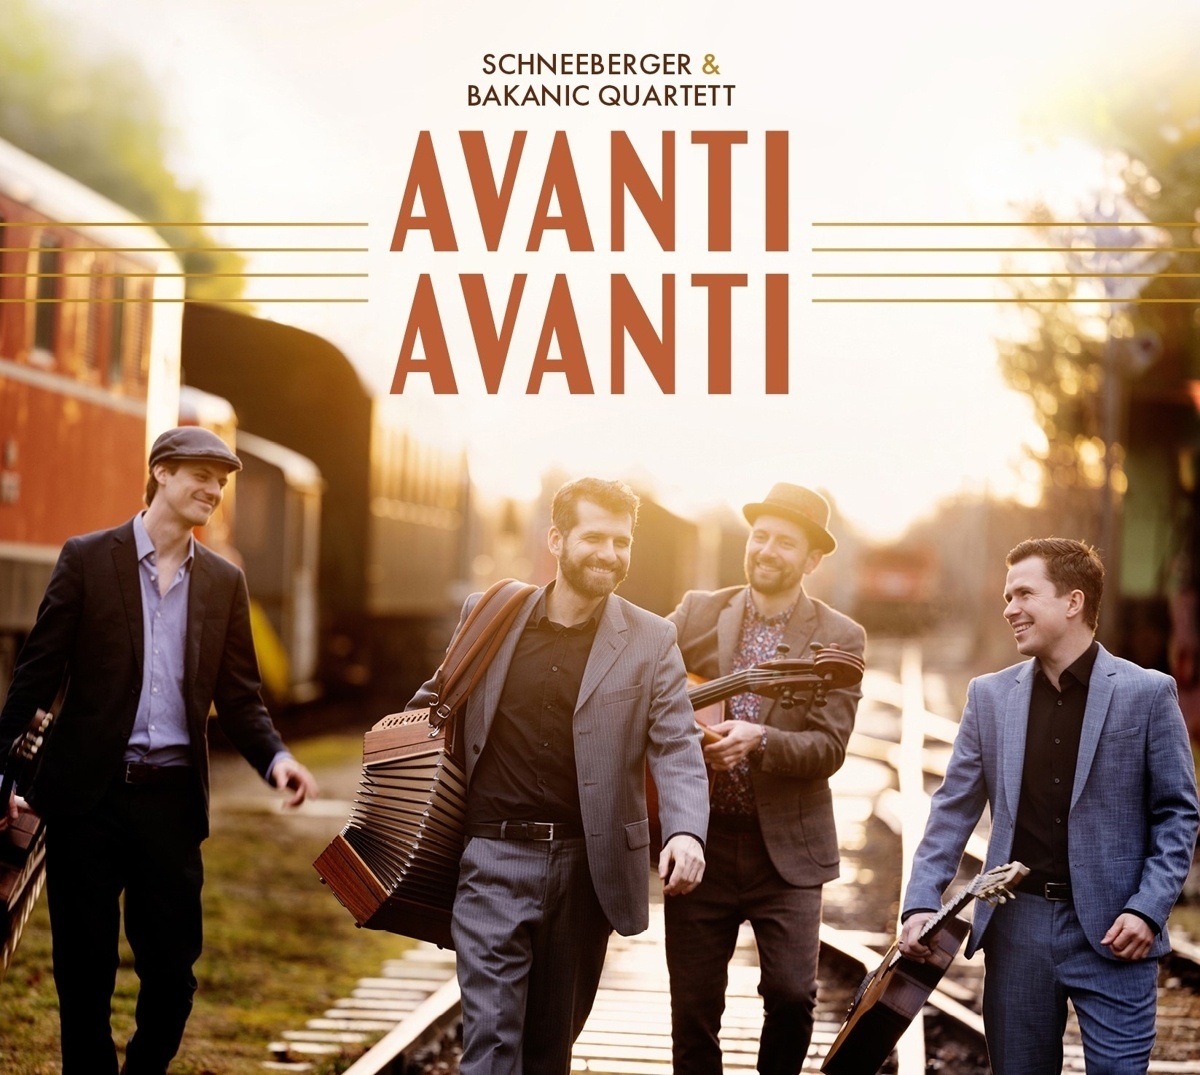 Avanti Avanti - Schneeberger  Bakanic Quartett. (CD)